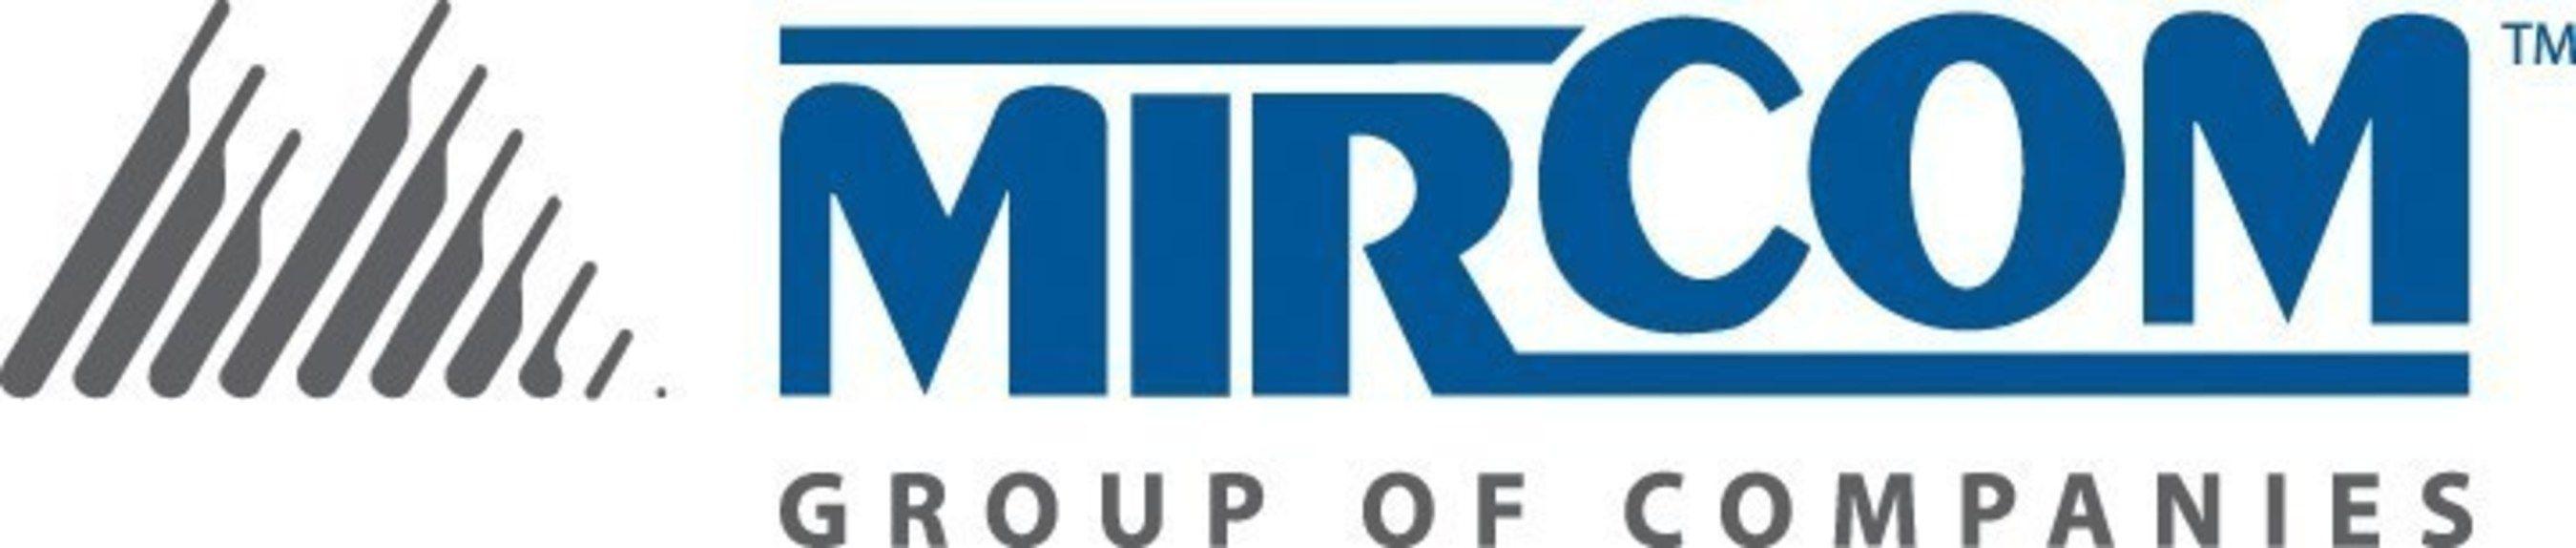 Mircom Logo - Mircom Group of Companies Acquires Advanced Emergency Communications ...